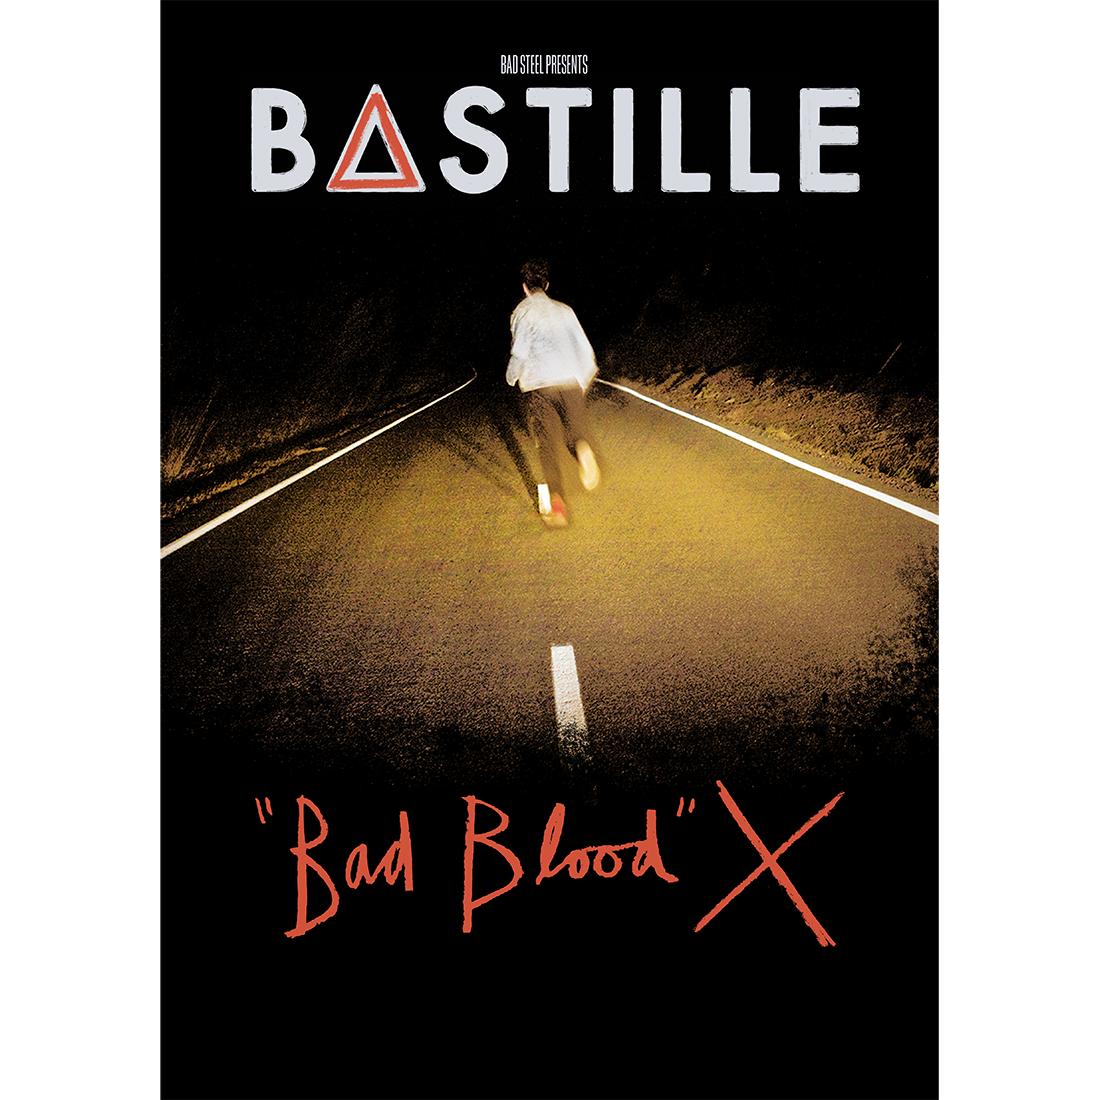 Bastille - “Bad Blood” X Exclusive Limited Signed Print